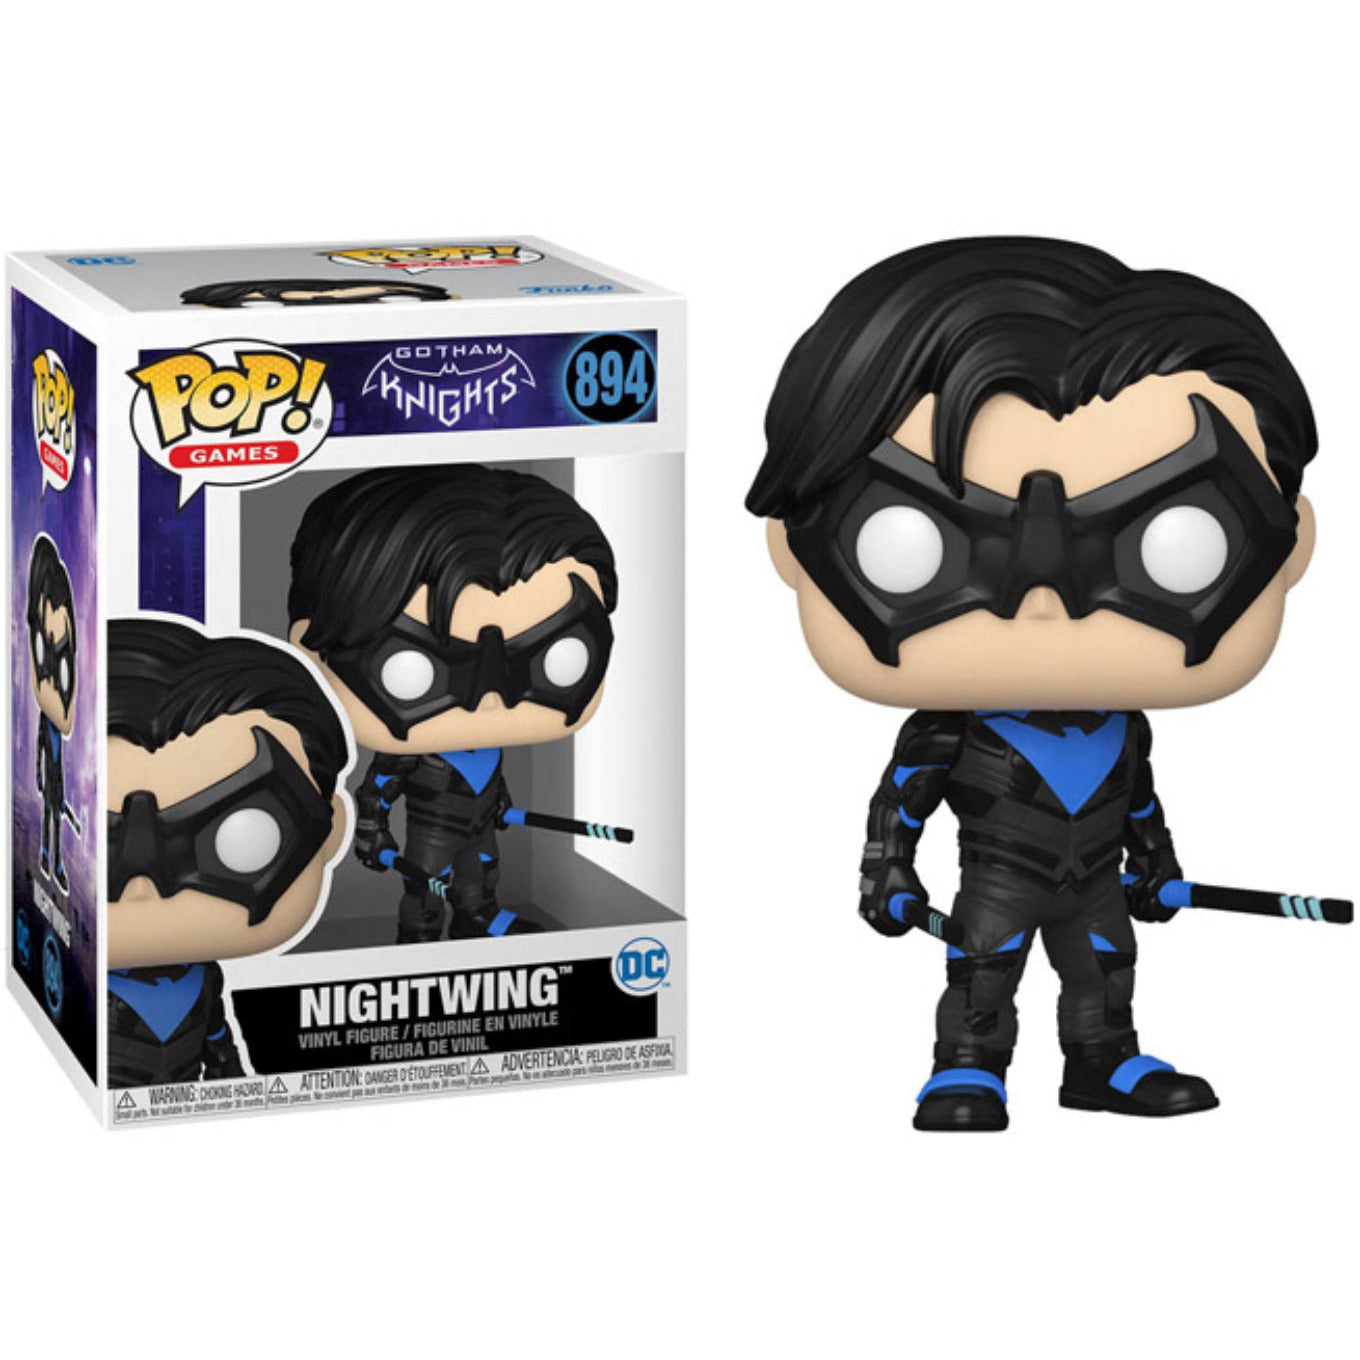 Funko pop! #894 DC Gotham Knights Nightwing in stock